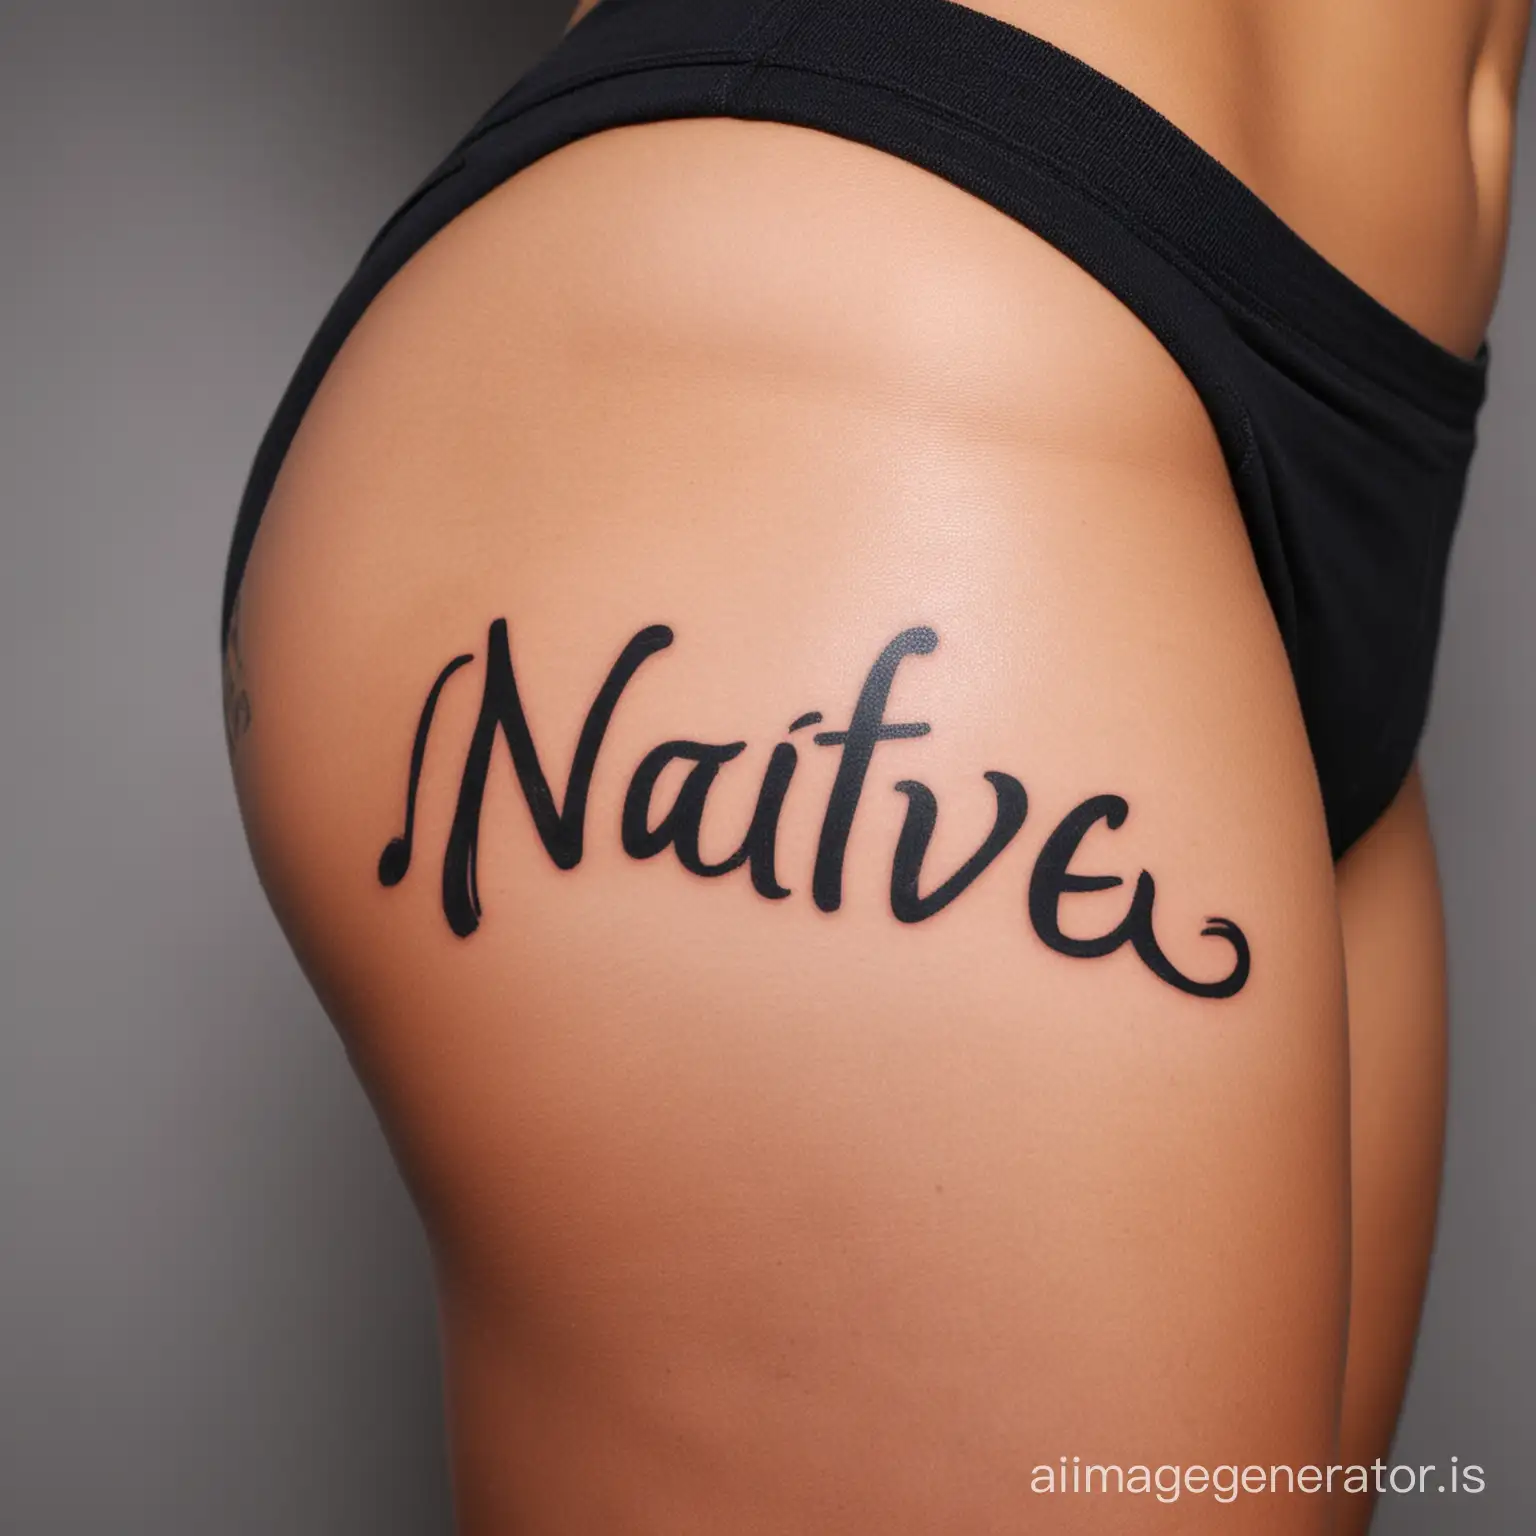 The words Native Naka tattooed on a latin girls inner thigh